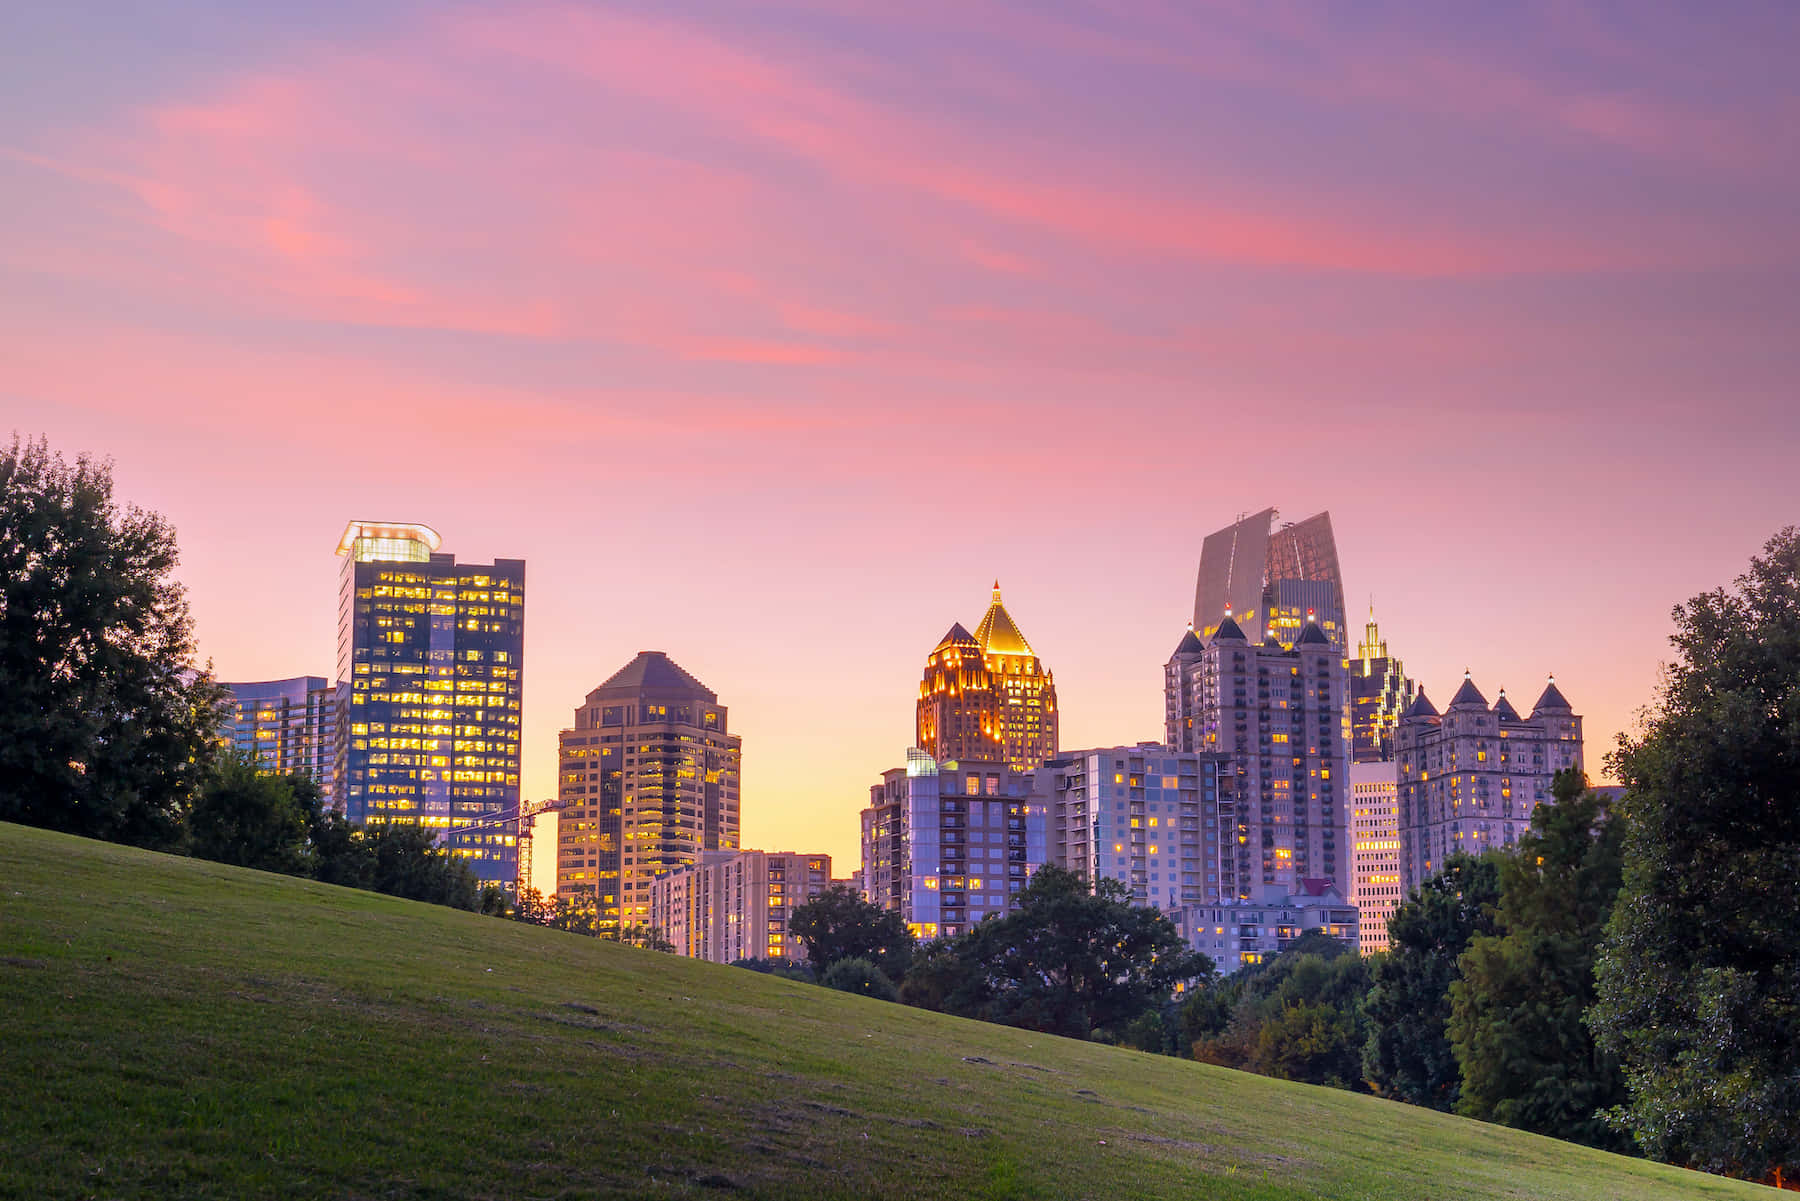 Enjoy the vibrant cityscape and culture of Atlanta, Georgia